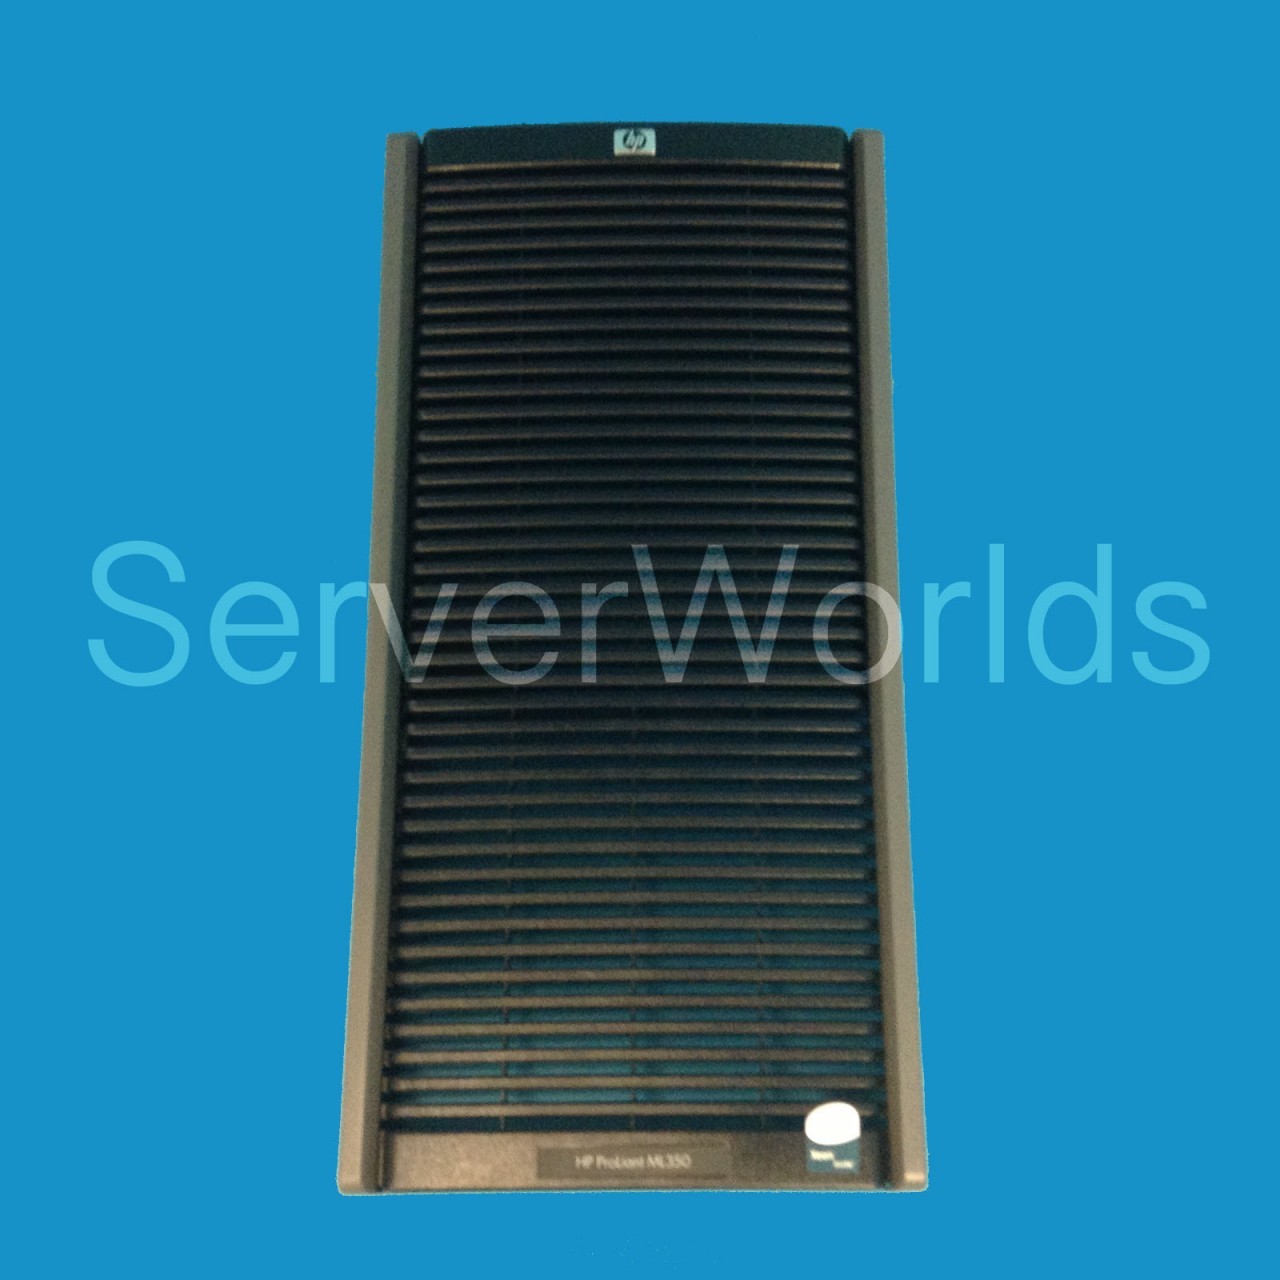 Hp proliant ml350 g4p server drivers download